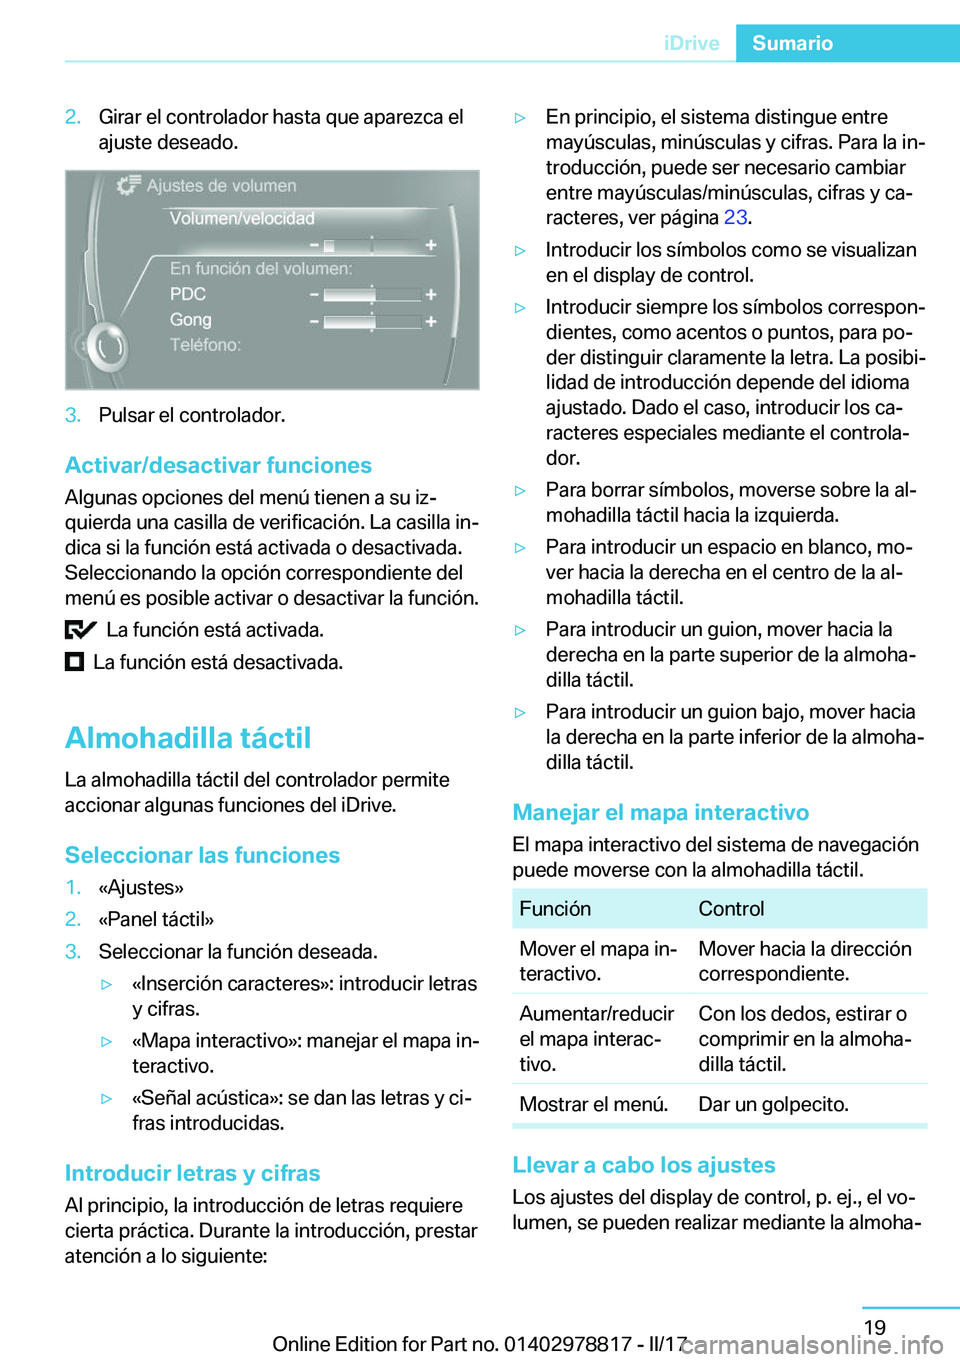 BMW I3 2017  Manuales de Empleo (in Spanish) �2�.�G�i�r�a�r� �e�l� �c�o�n�t�r�o�l�a�d�o�r� �h�a�s�t�a� �q�u�e� �a�p�a�r�e�z�c�a� �e�l
�a�j�u�s�t�e� �d�e�s�e�a�d�o�.�3�.�P�u�l�s�a�r� �e�l� �c�o�n�t�r�o�l�a�d�o�r�.
�A�c�t�i�v�a�r�/�d�e�s�a�c�t�i�v